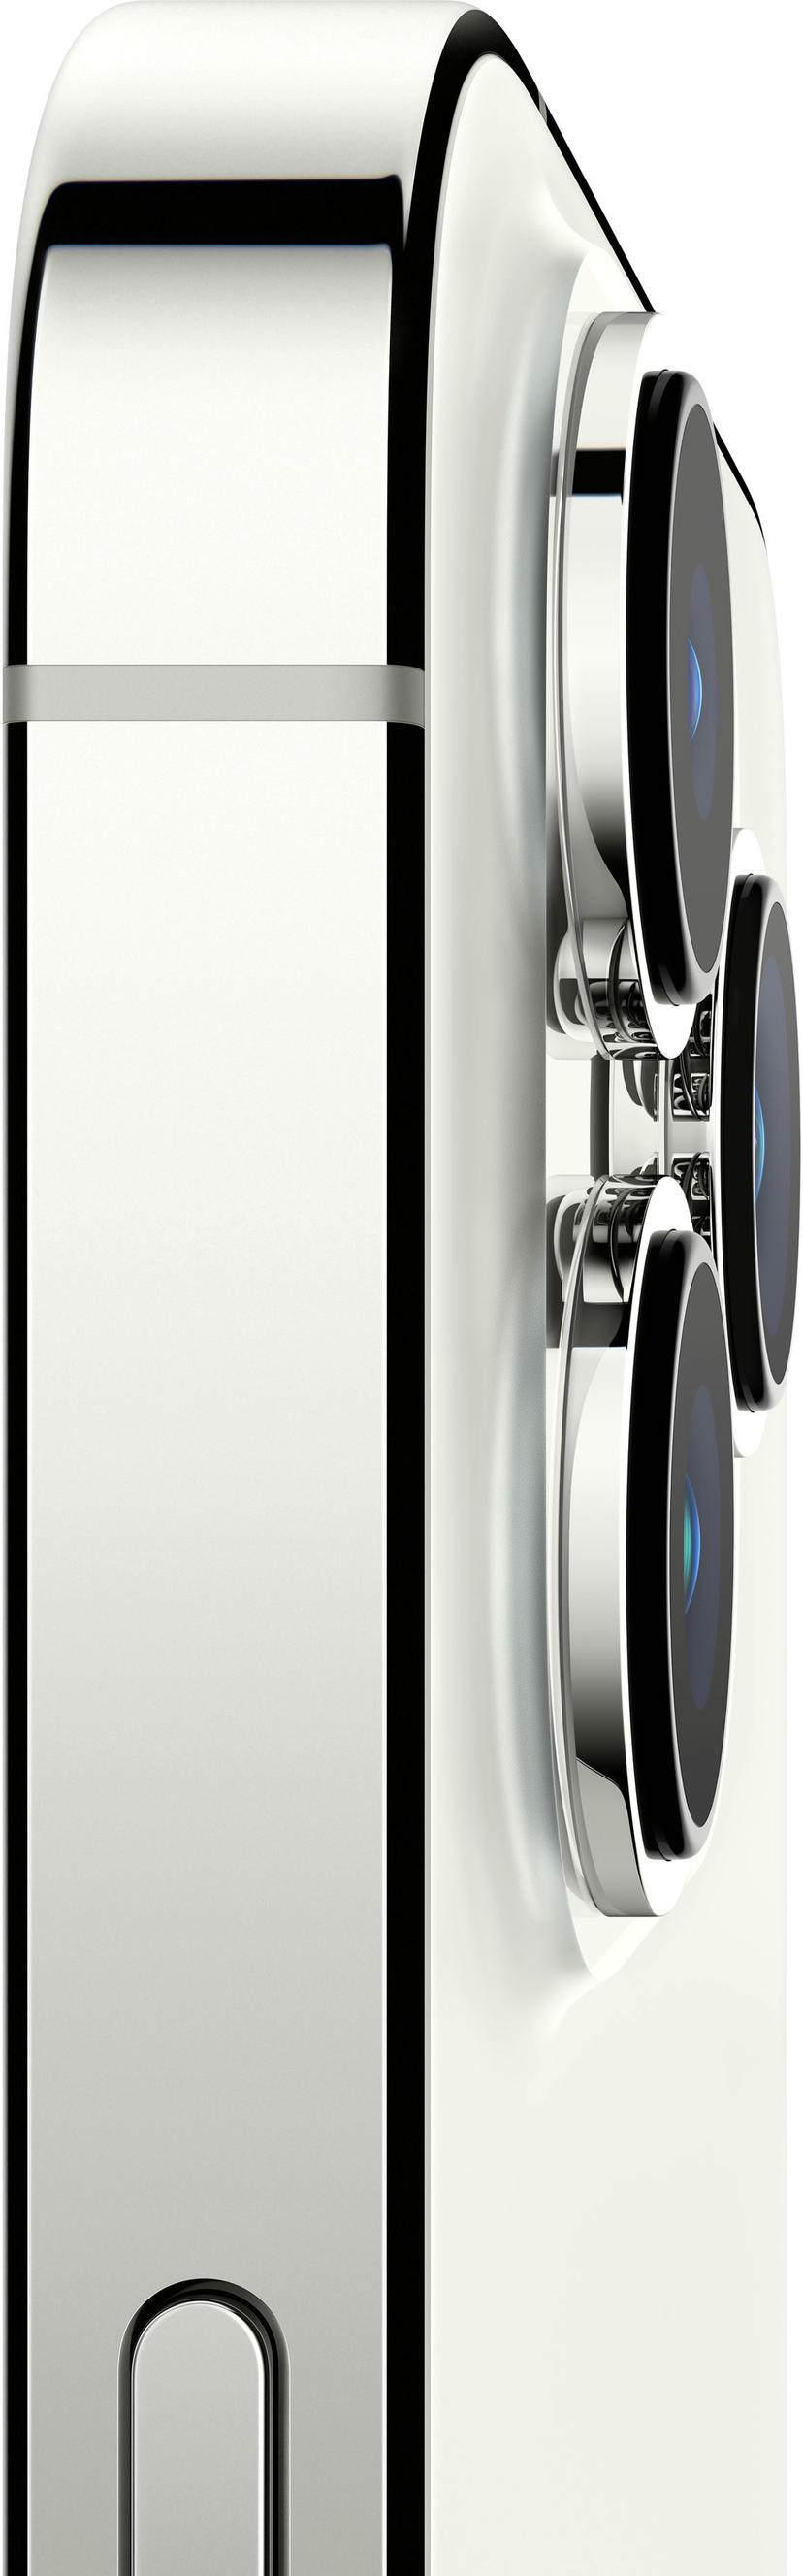 Apple iPhone 13 Pro Max 128GB Silver